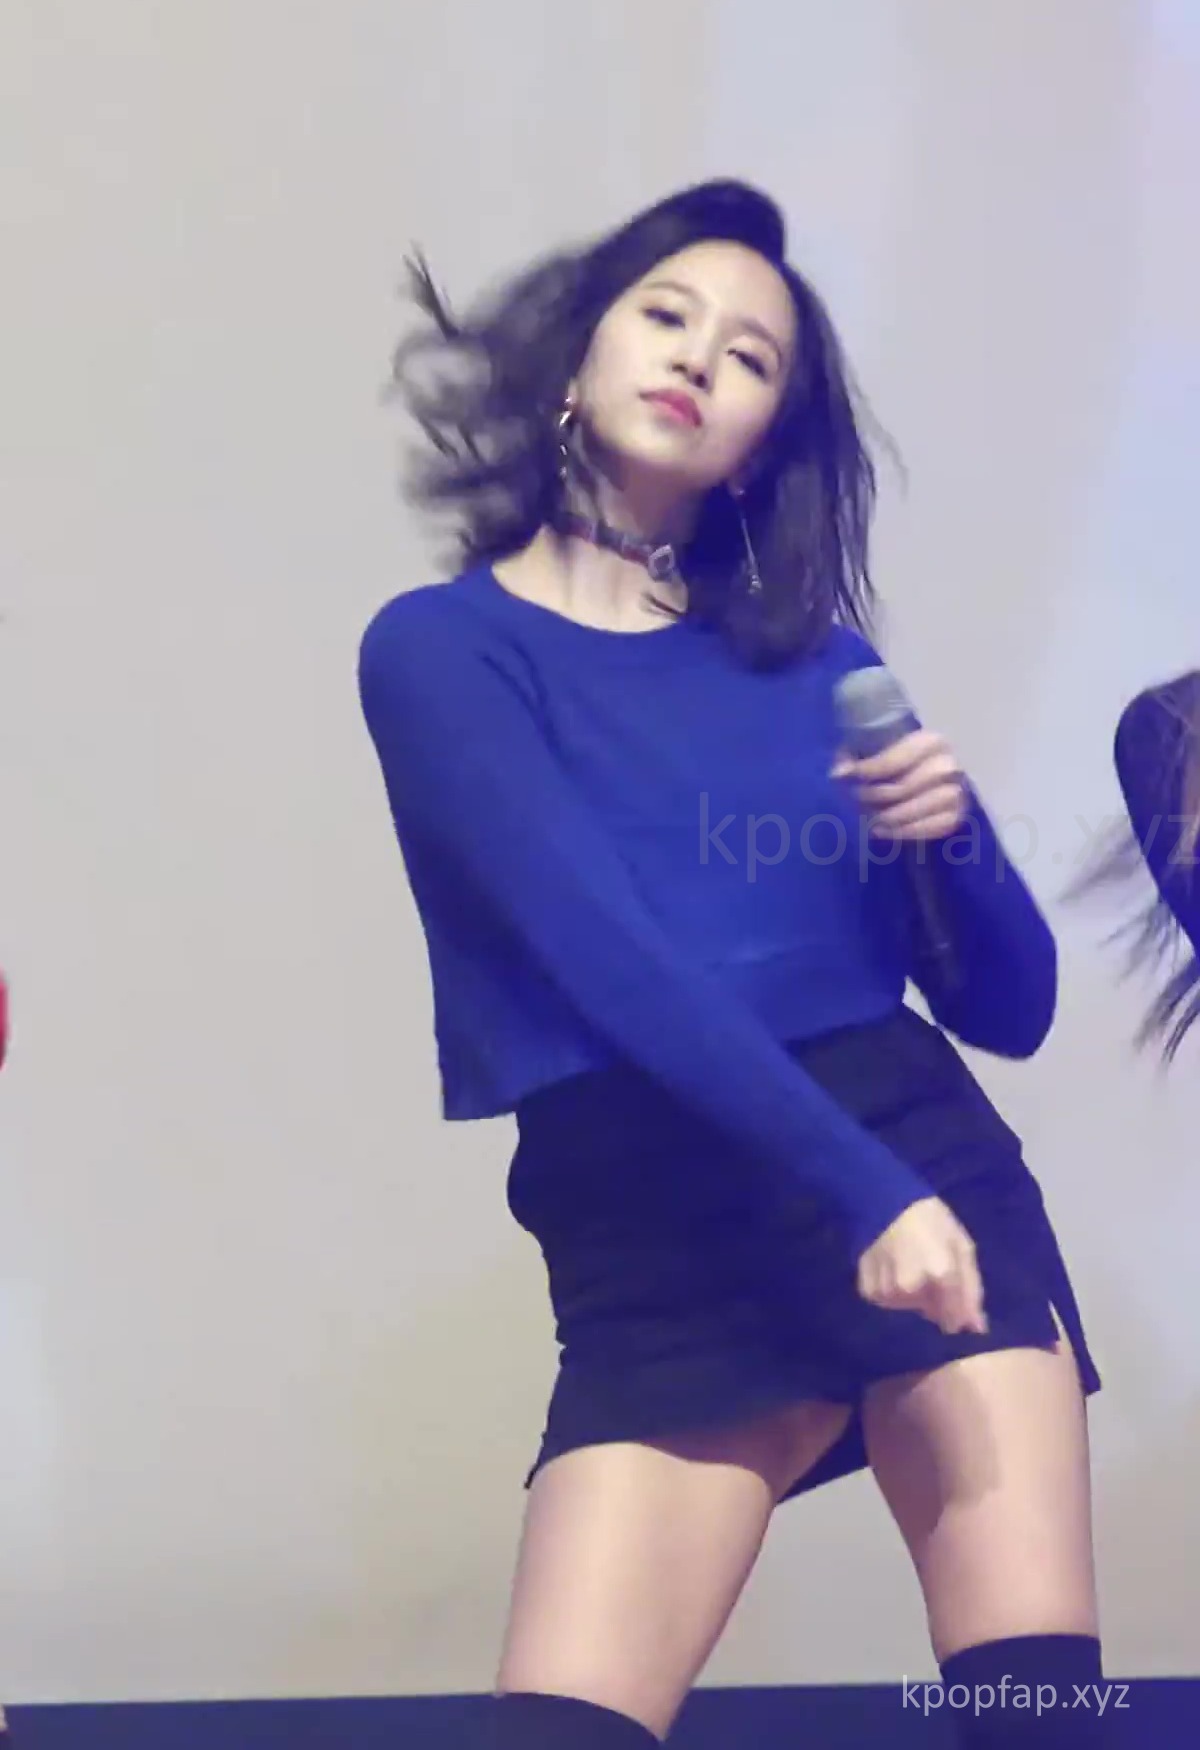 Twice - Mina - Cheeks, Thighs ,Twice Mina Cheeks from front , Twice Mina sexy thighs, Twice Mina jiggle thighs